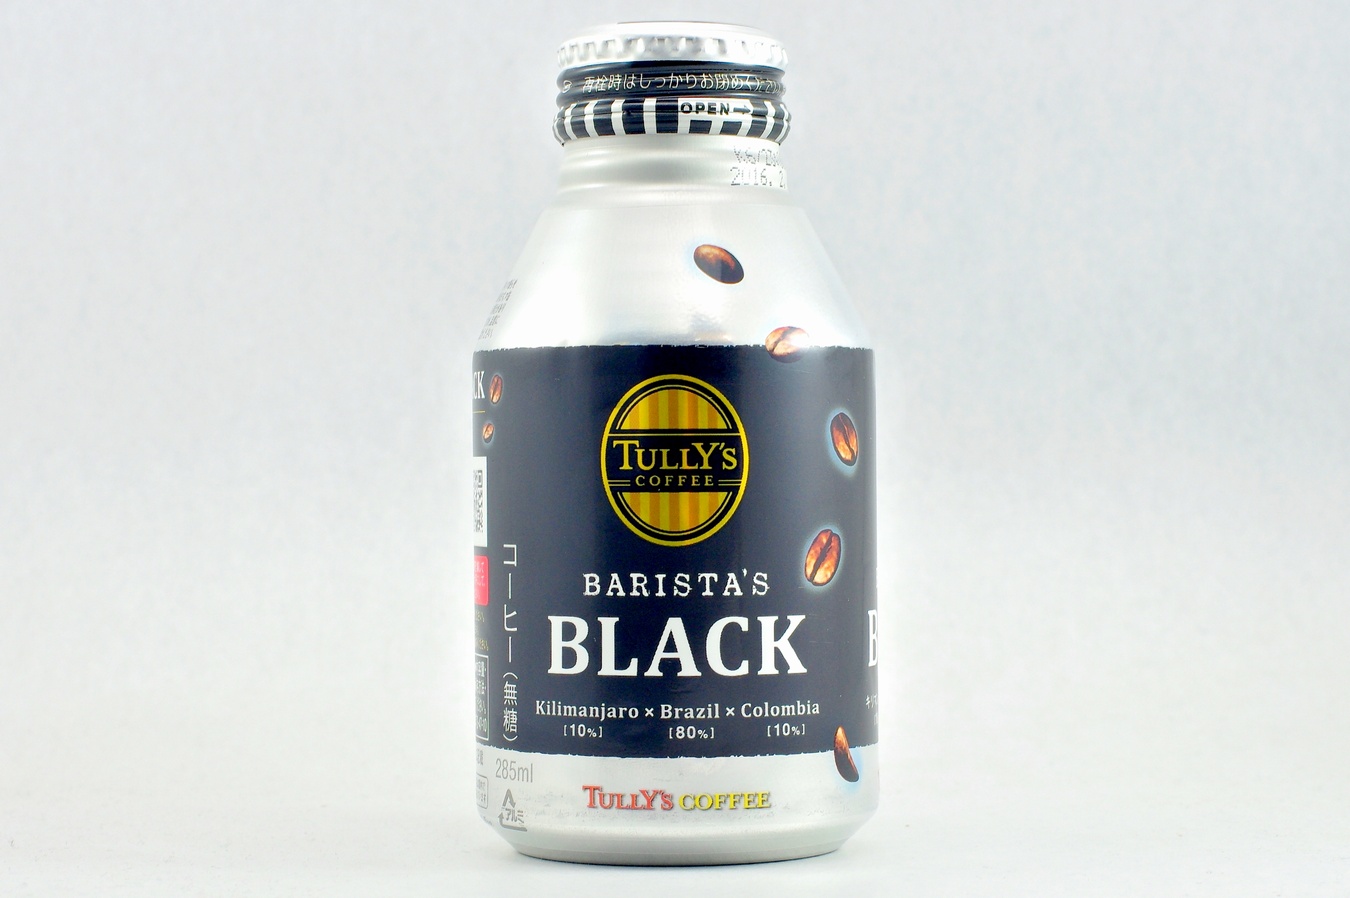 TULLY'S COFFEE BARISTA'S COFFEE BLACK 285mlボトル缶 2015年2月